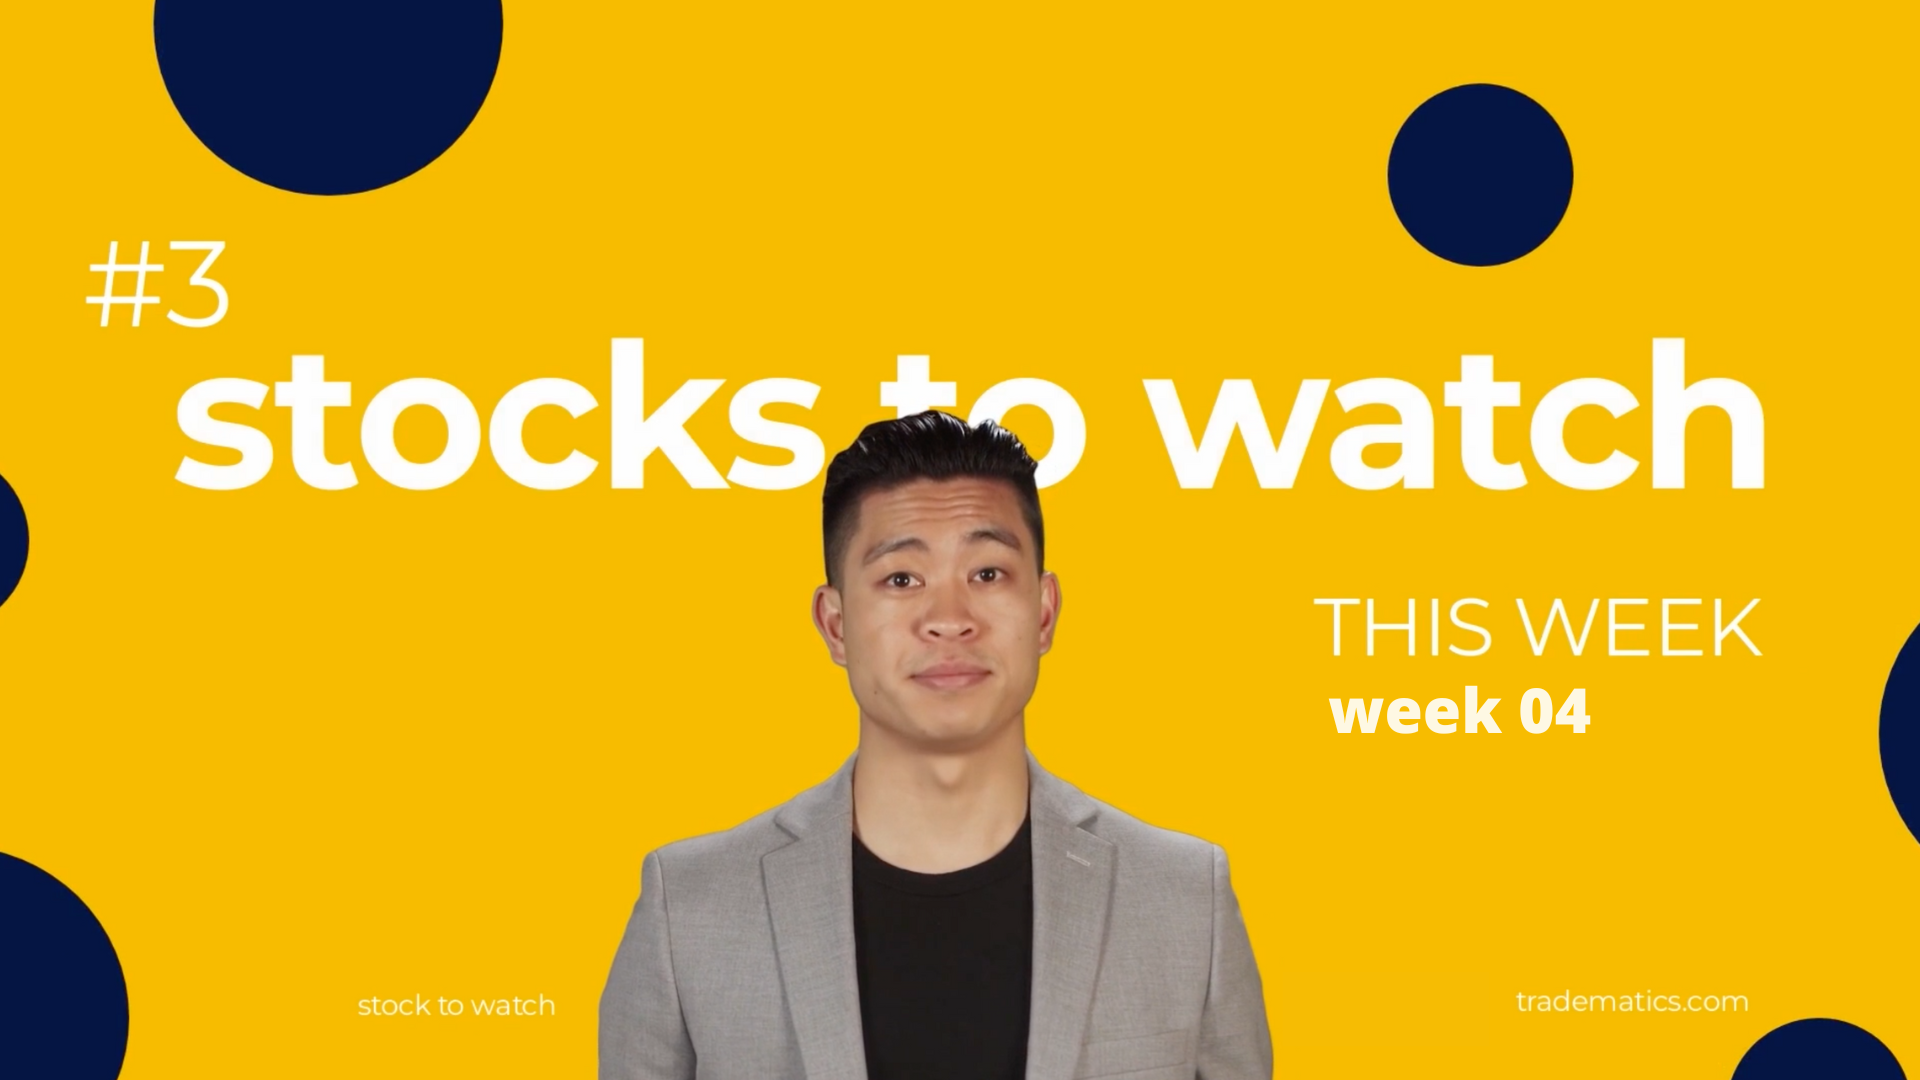 Tradematics | Stocks to Watch this week | week 04